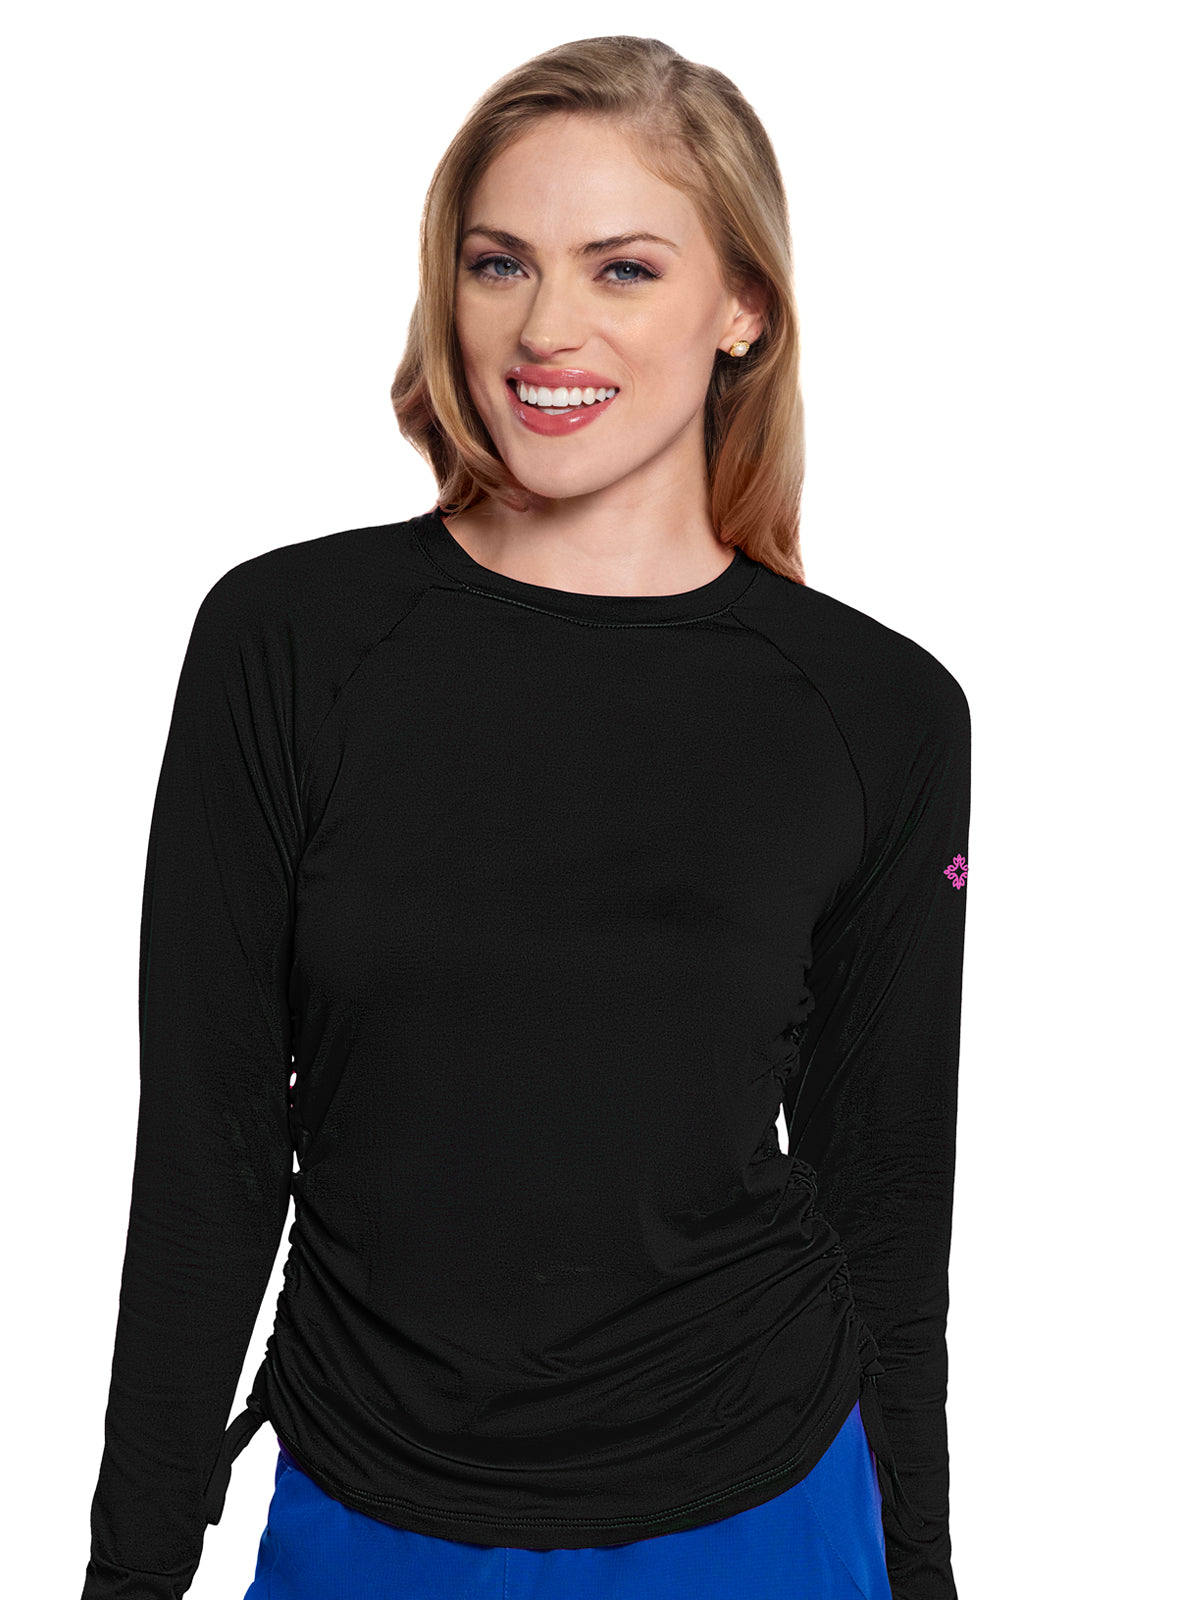 Women's Pocketless Long Sleeve Underscrub Shirt - 700 - Black